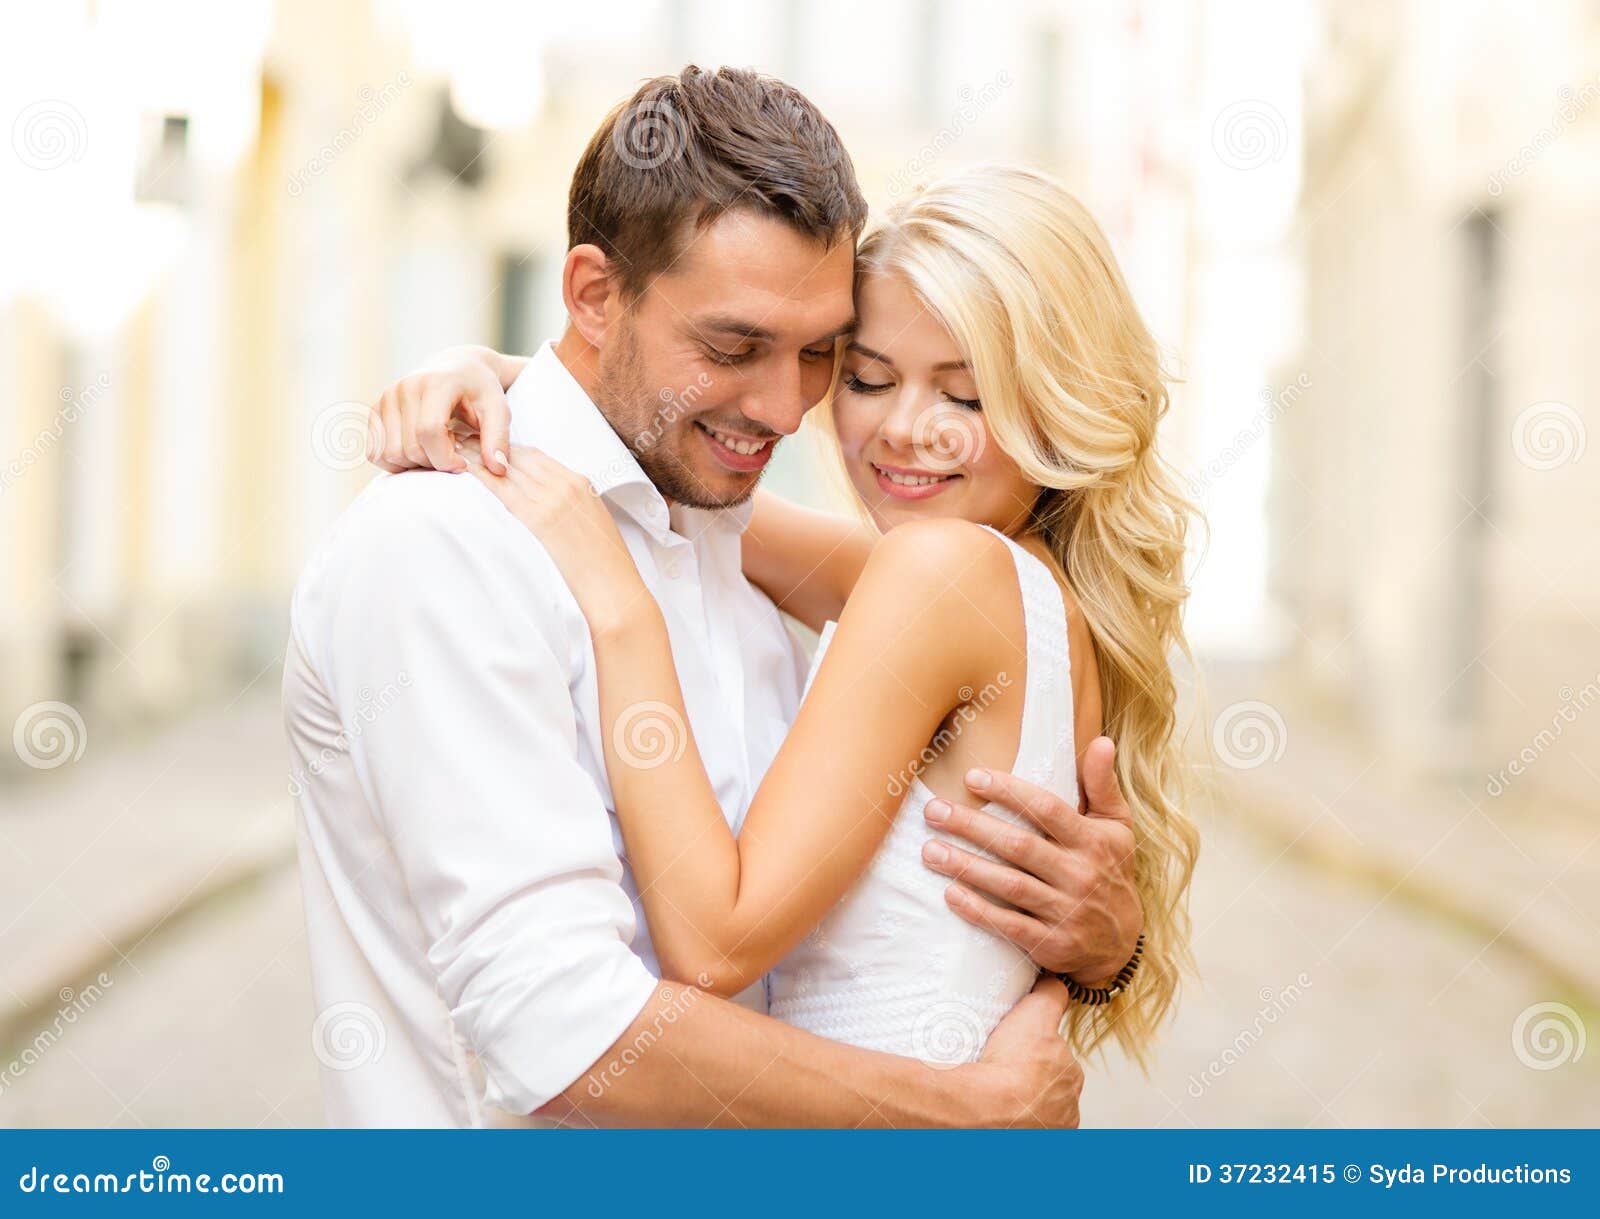 Romantic Happy Couple Hugging In The Street Stock Image ...